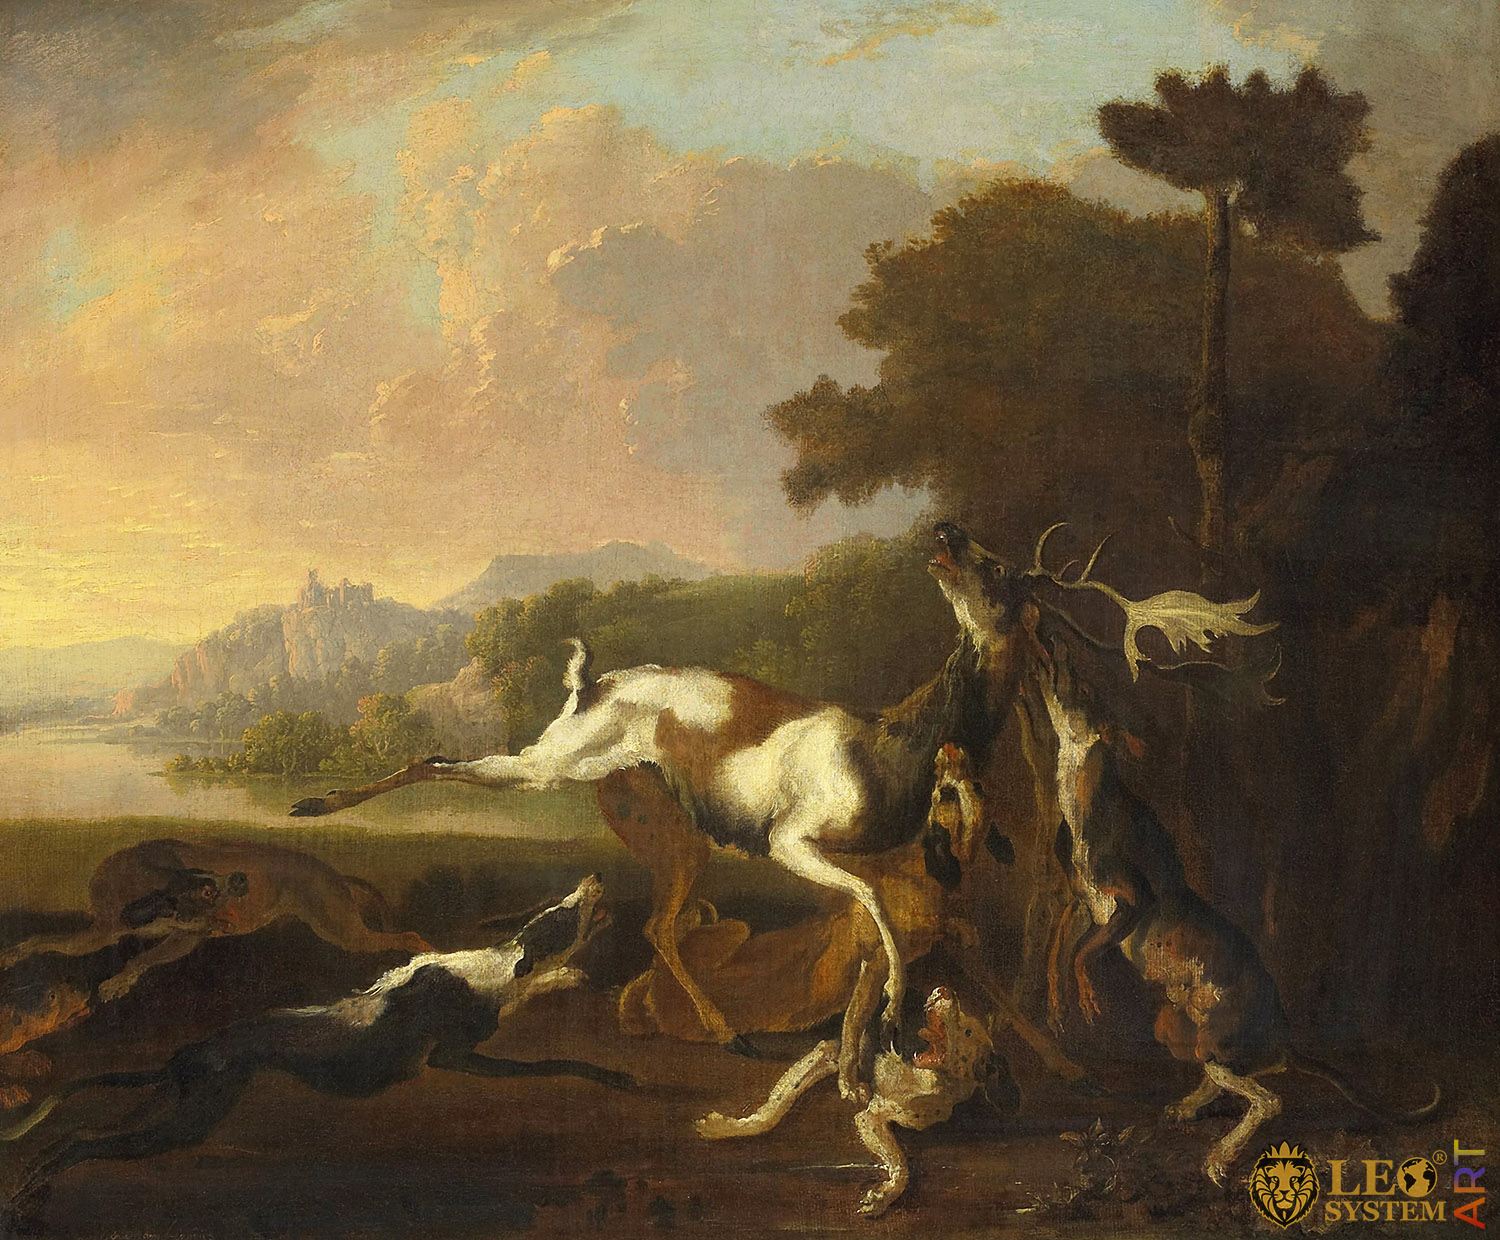 The Deer Hunt, Painter: Abraham Hondius, 1650-1695, Dutch Painting